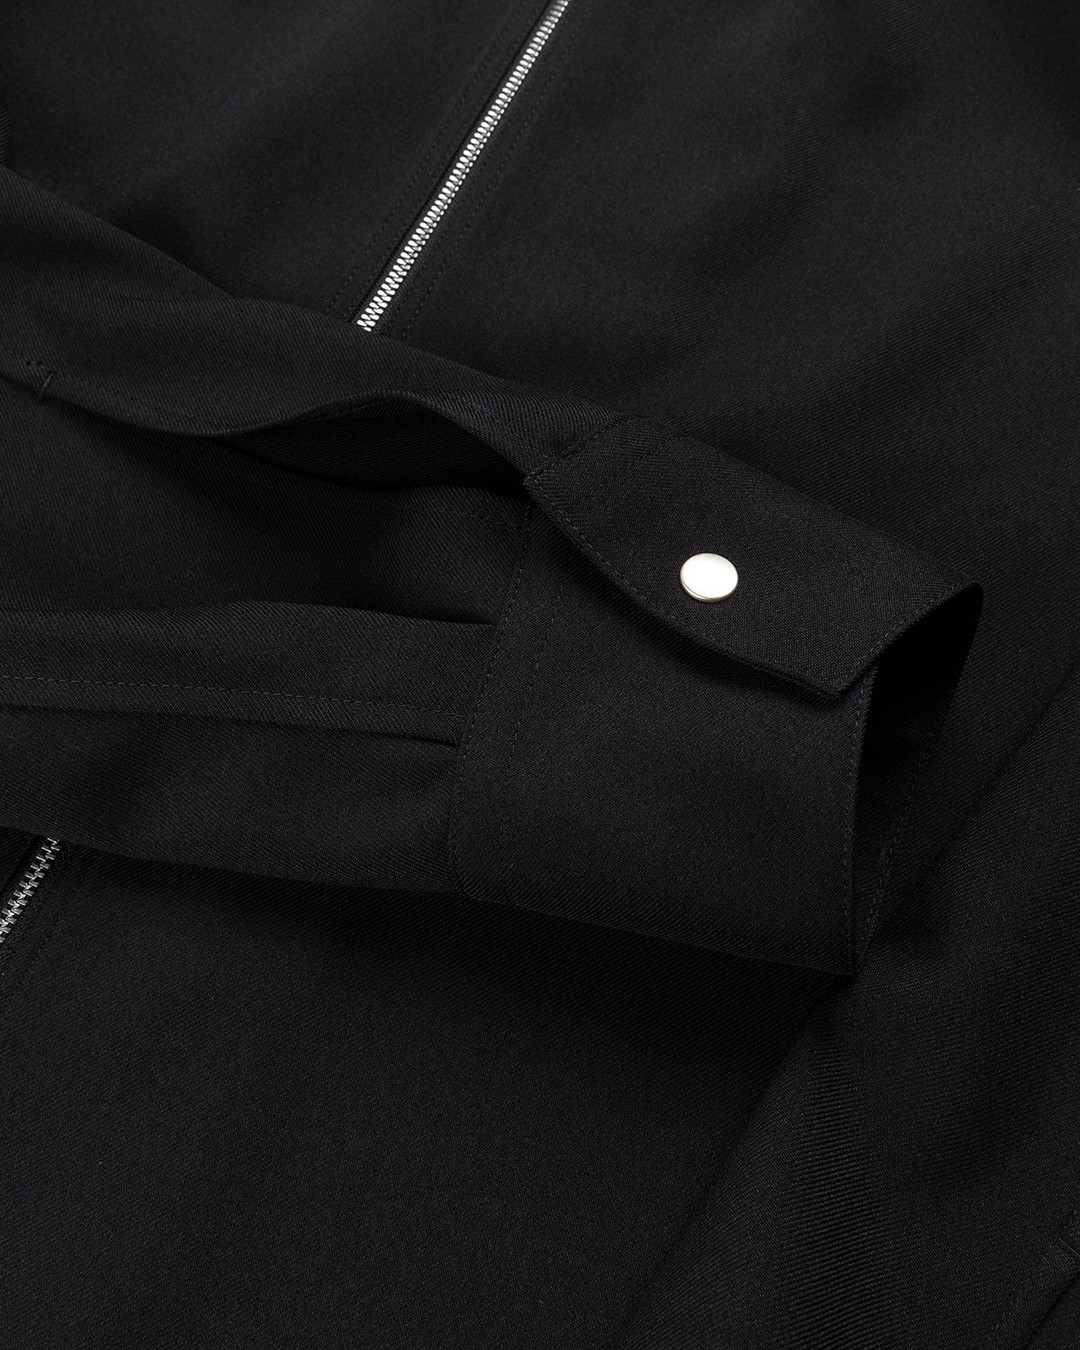 Jil Sander – Full Zip Shirt Black - Longsleeve Shirts - Black - Image 3